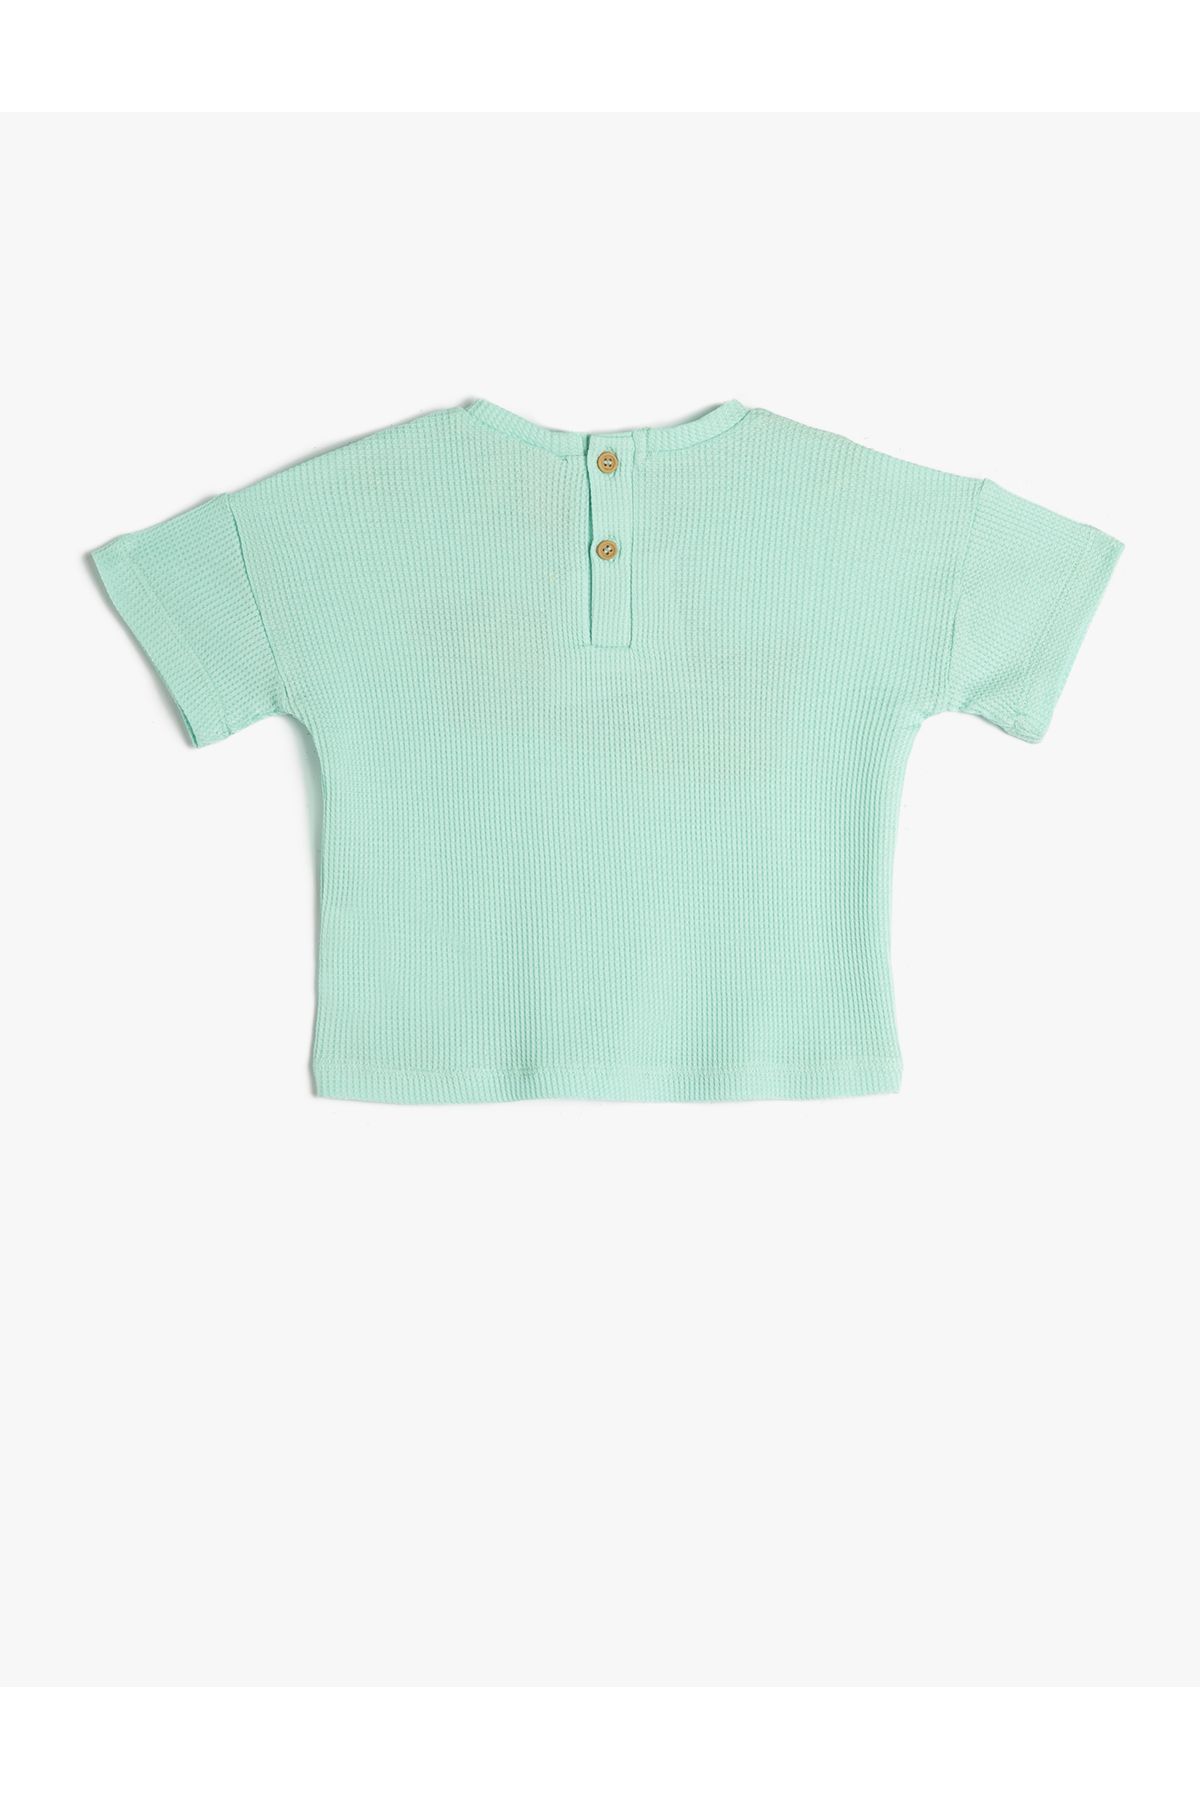 Koton تی شرت آستین کوتاه با دکمه نخی بسته در پشت یقه گرد چاپ شده است